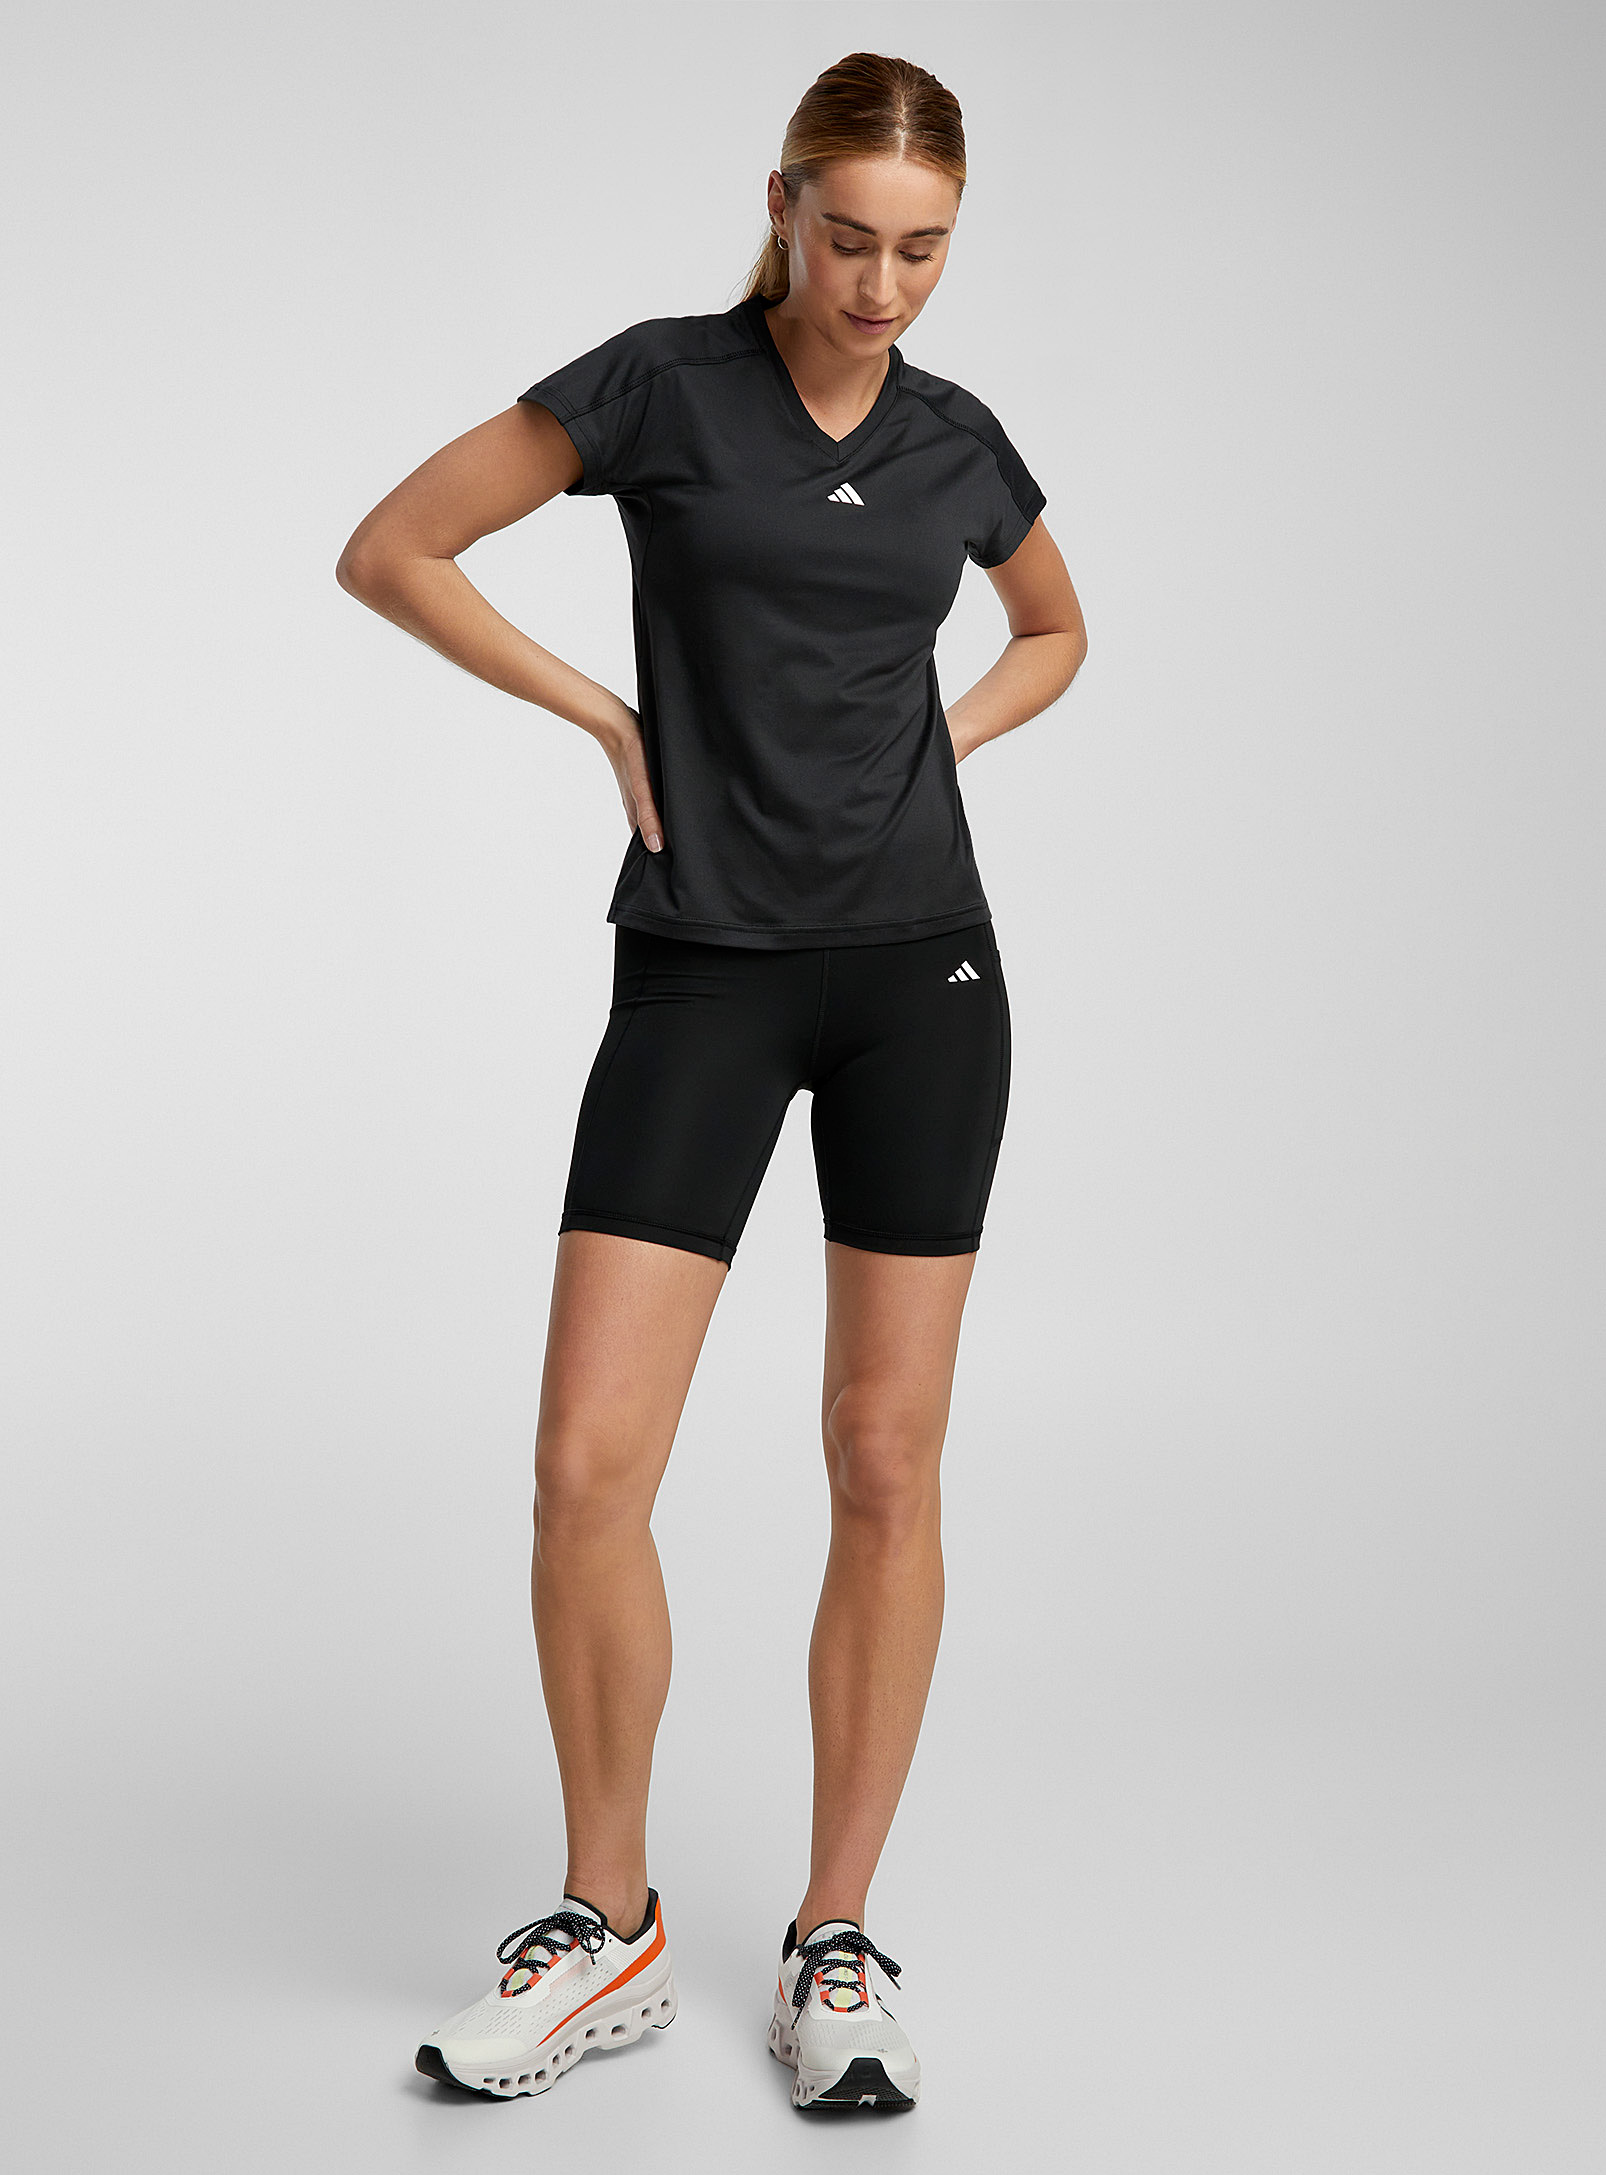 Adidas - Women's Optime 7-inch pocket biker short